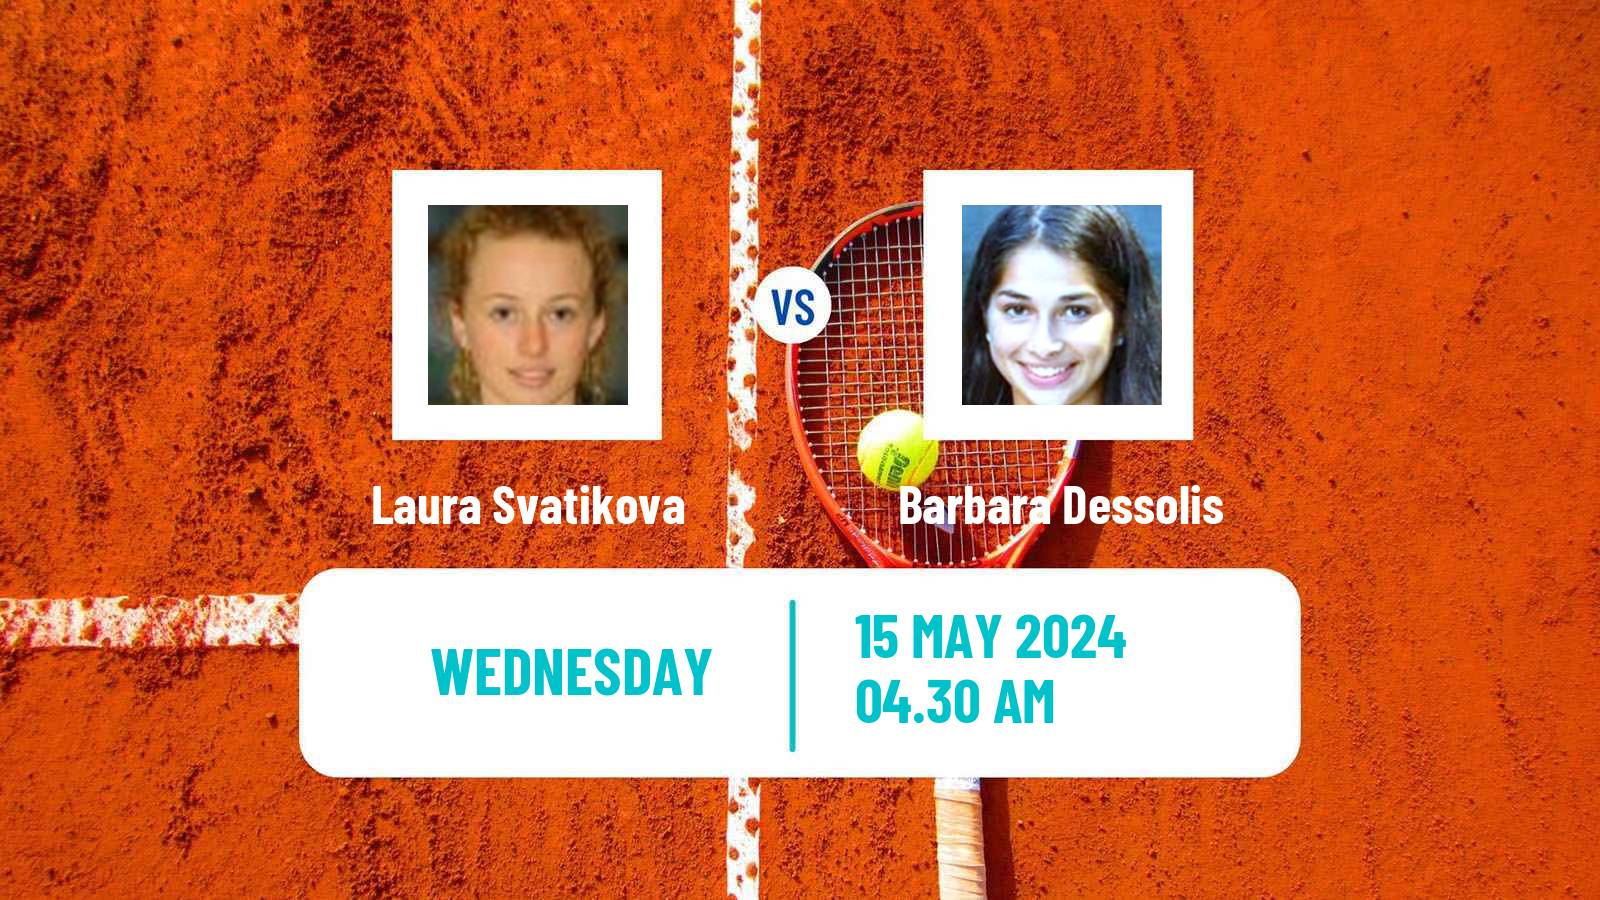 Tennis ITF W15 Kranjska Gora Women Laura Svatikova - Barbara Dessolis